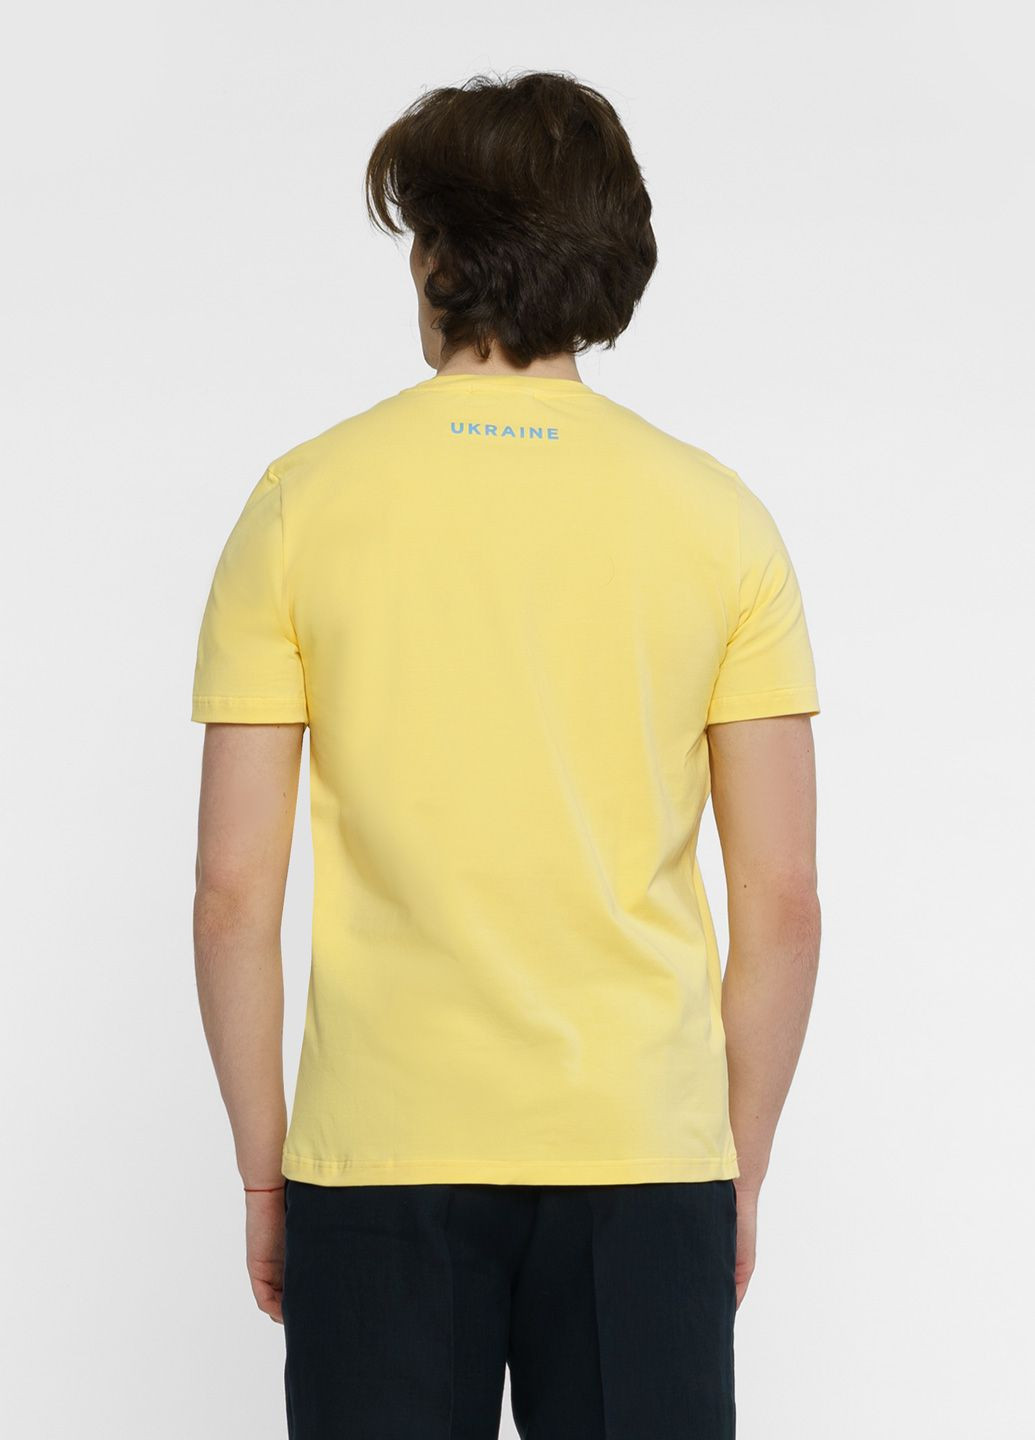 Желтая футболка унисекс freedom желтая с коротким рукавом Arber T-SHIRT FF19